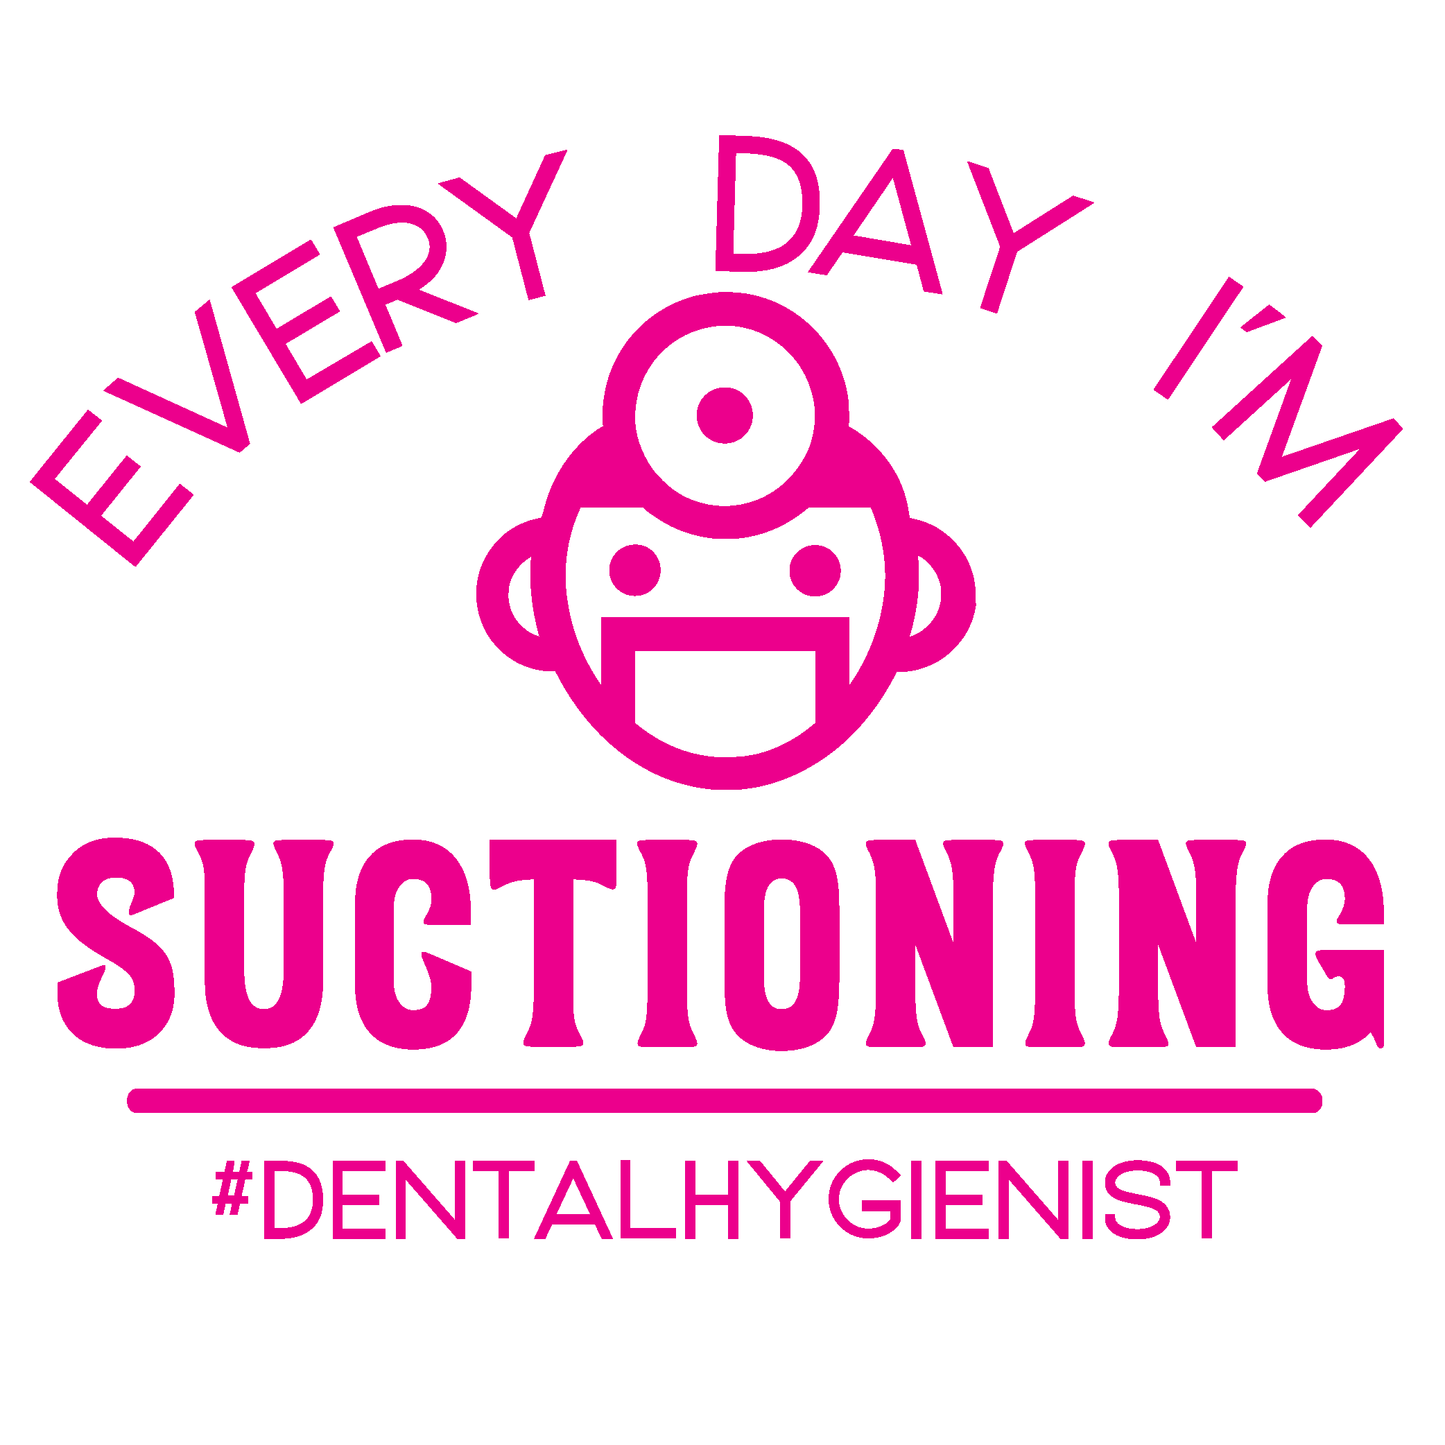 ShopVinylDesignStore.com Dental Hygienist, Every Day I'm Suctioning Wide Shop Vinyl Design decals stickers